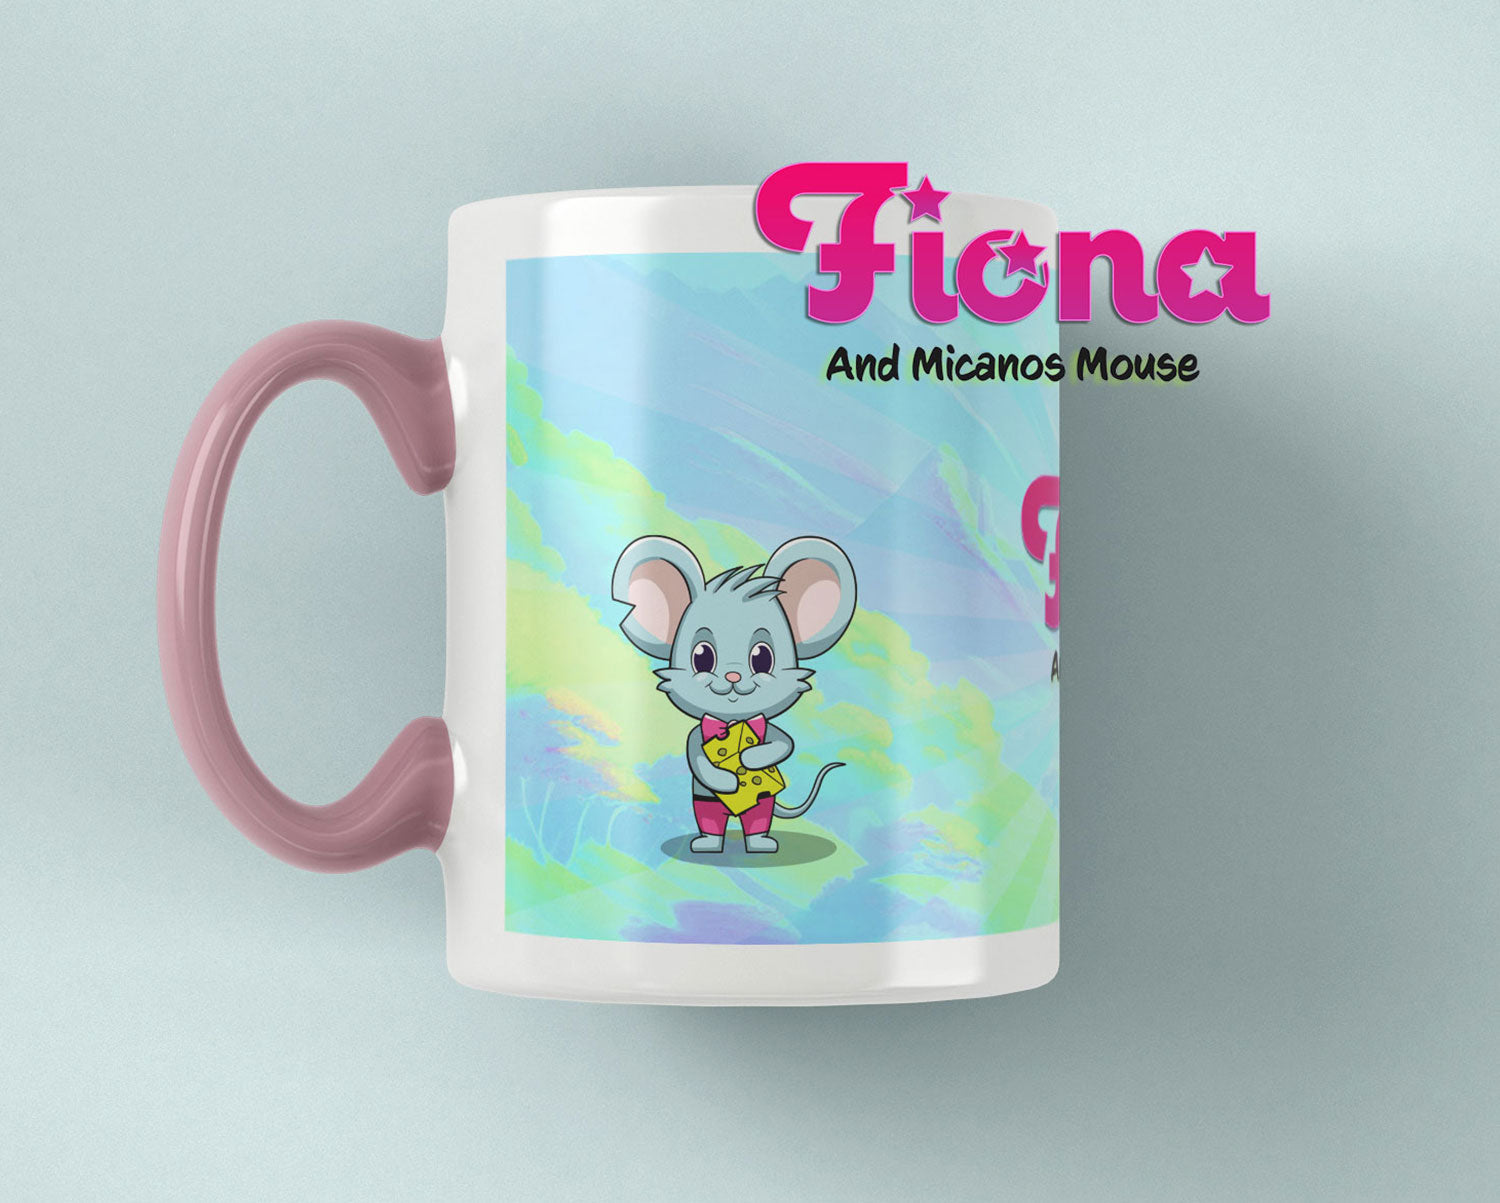 Fiona And Micanos Mouse's 'Time for Tea' Mug!